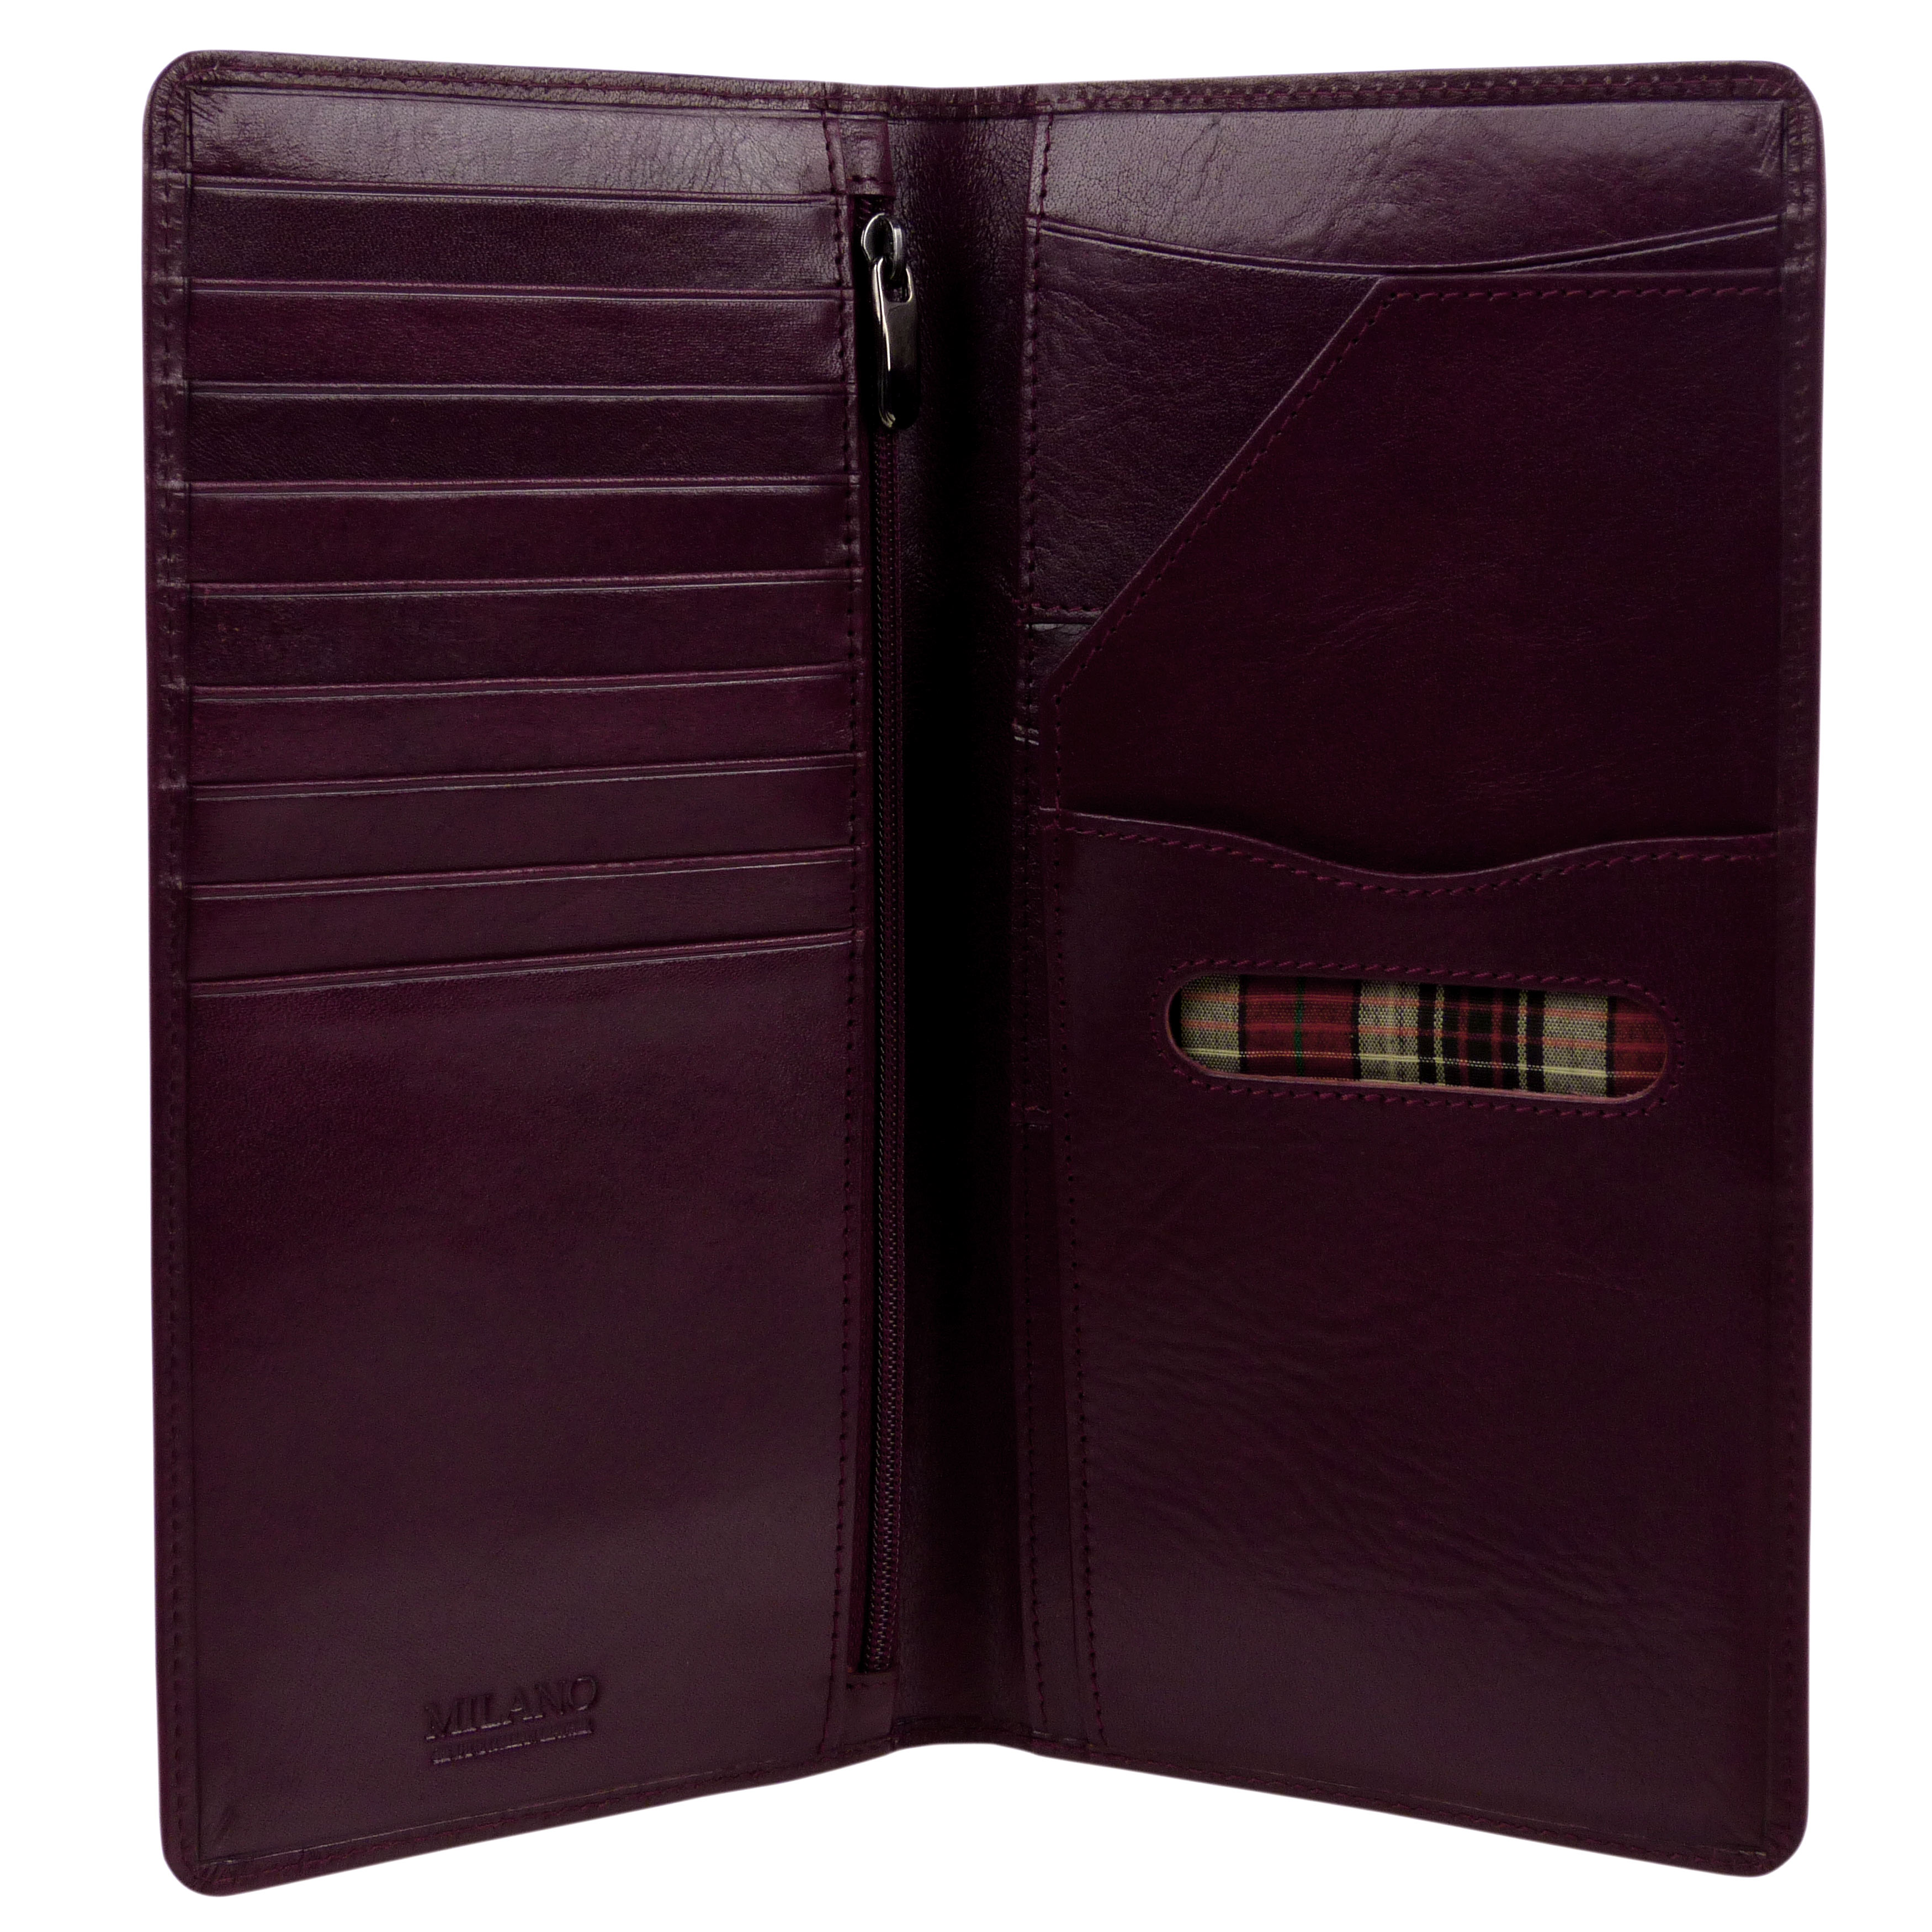 Golunski Stylish Organiser High Quality Leather Travel Wallet Passport Holder. 